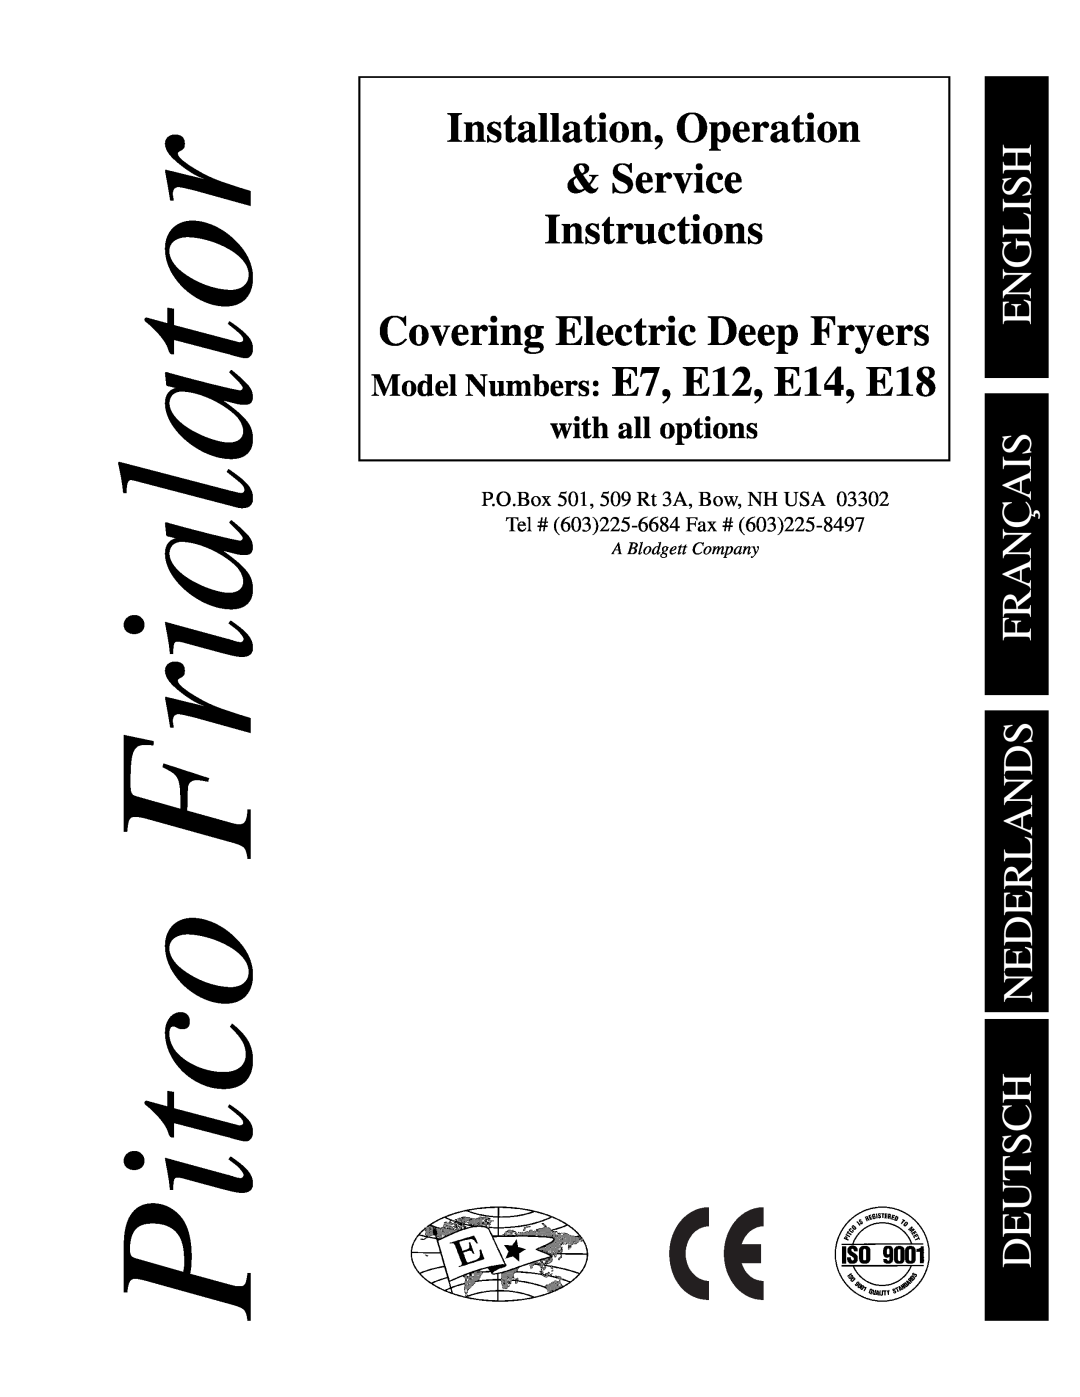 Pitco Frialator E18, E7, E14, E12 manual with all options, Pitco Frialator, Installation, Operation &Service Instructions 